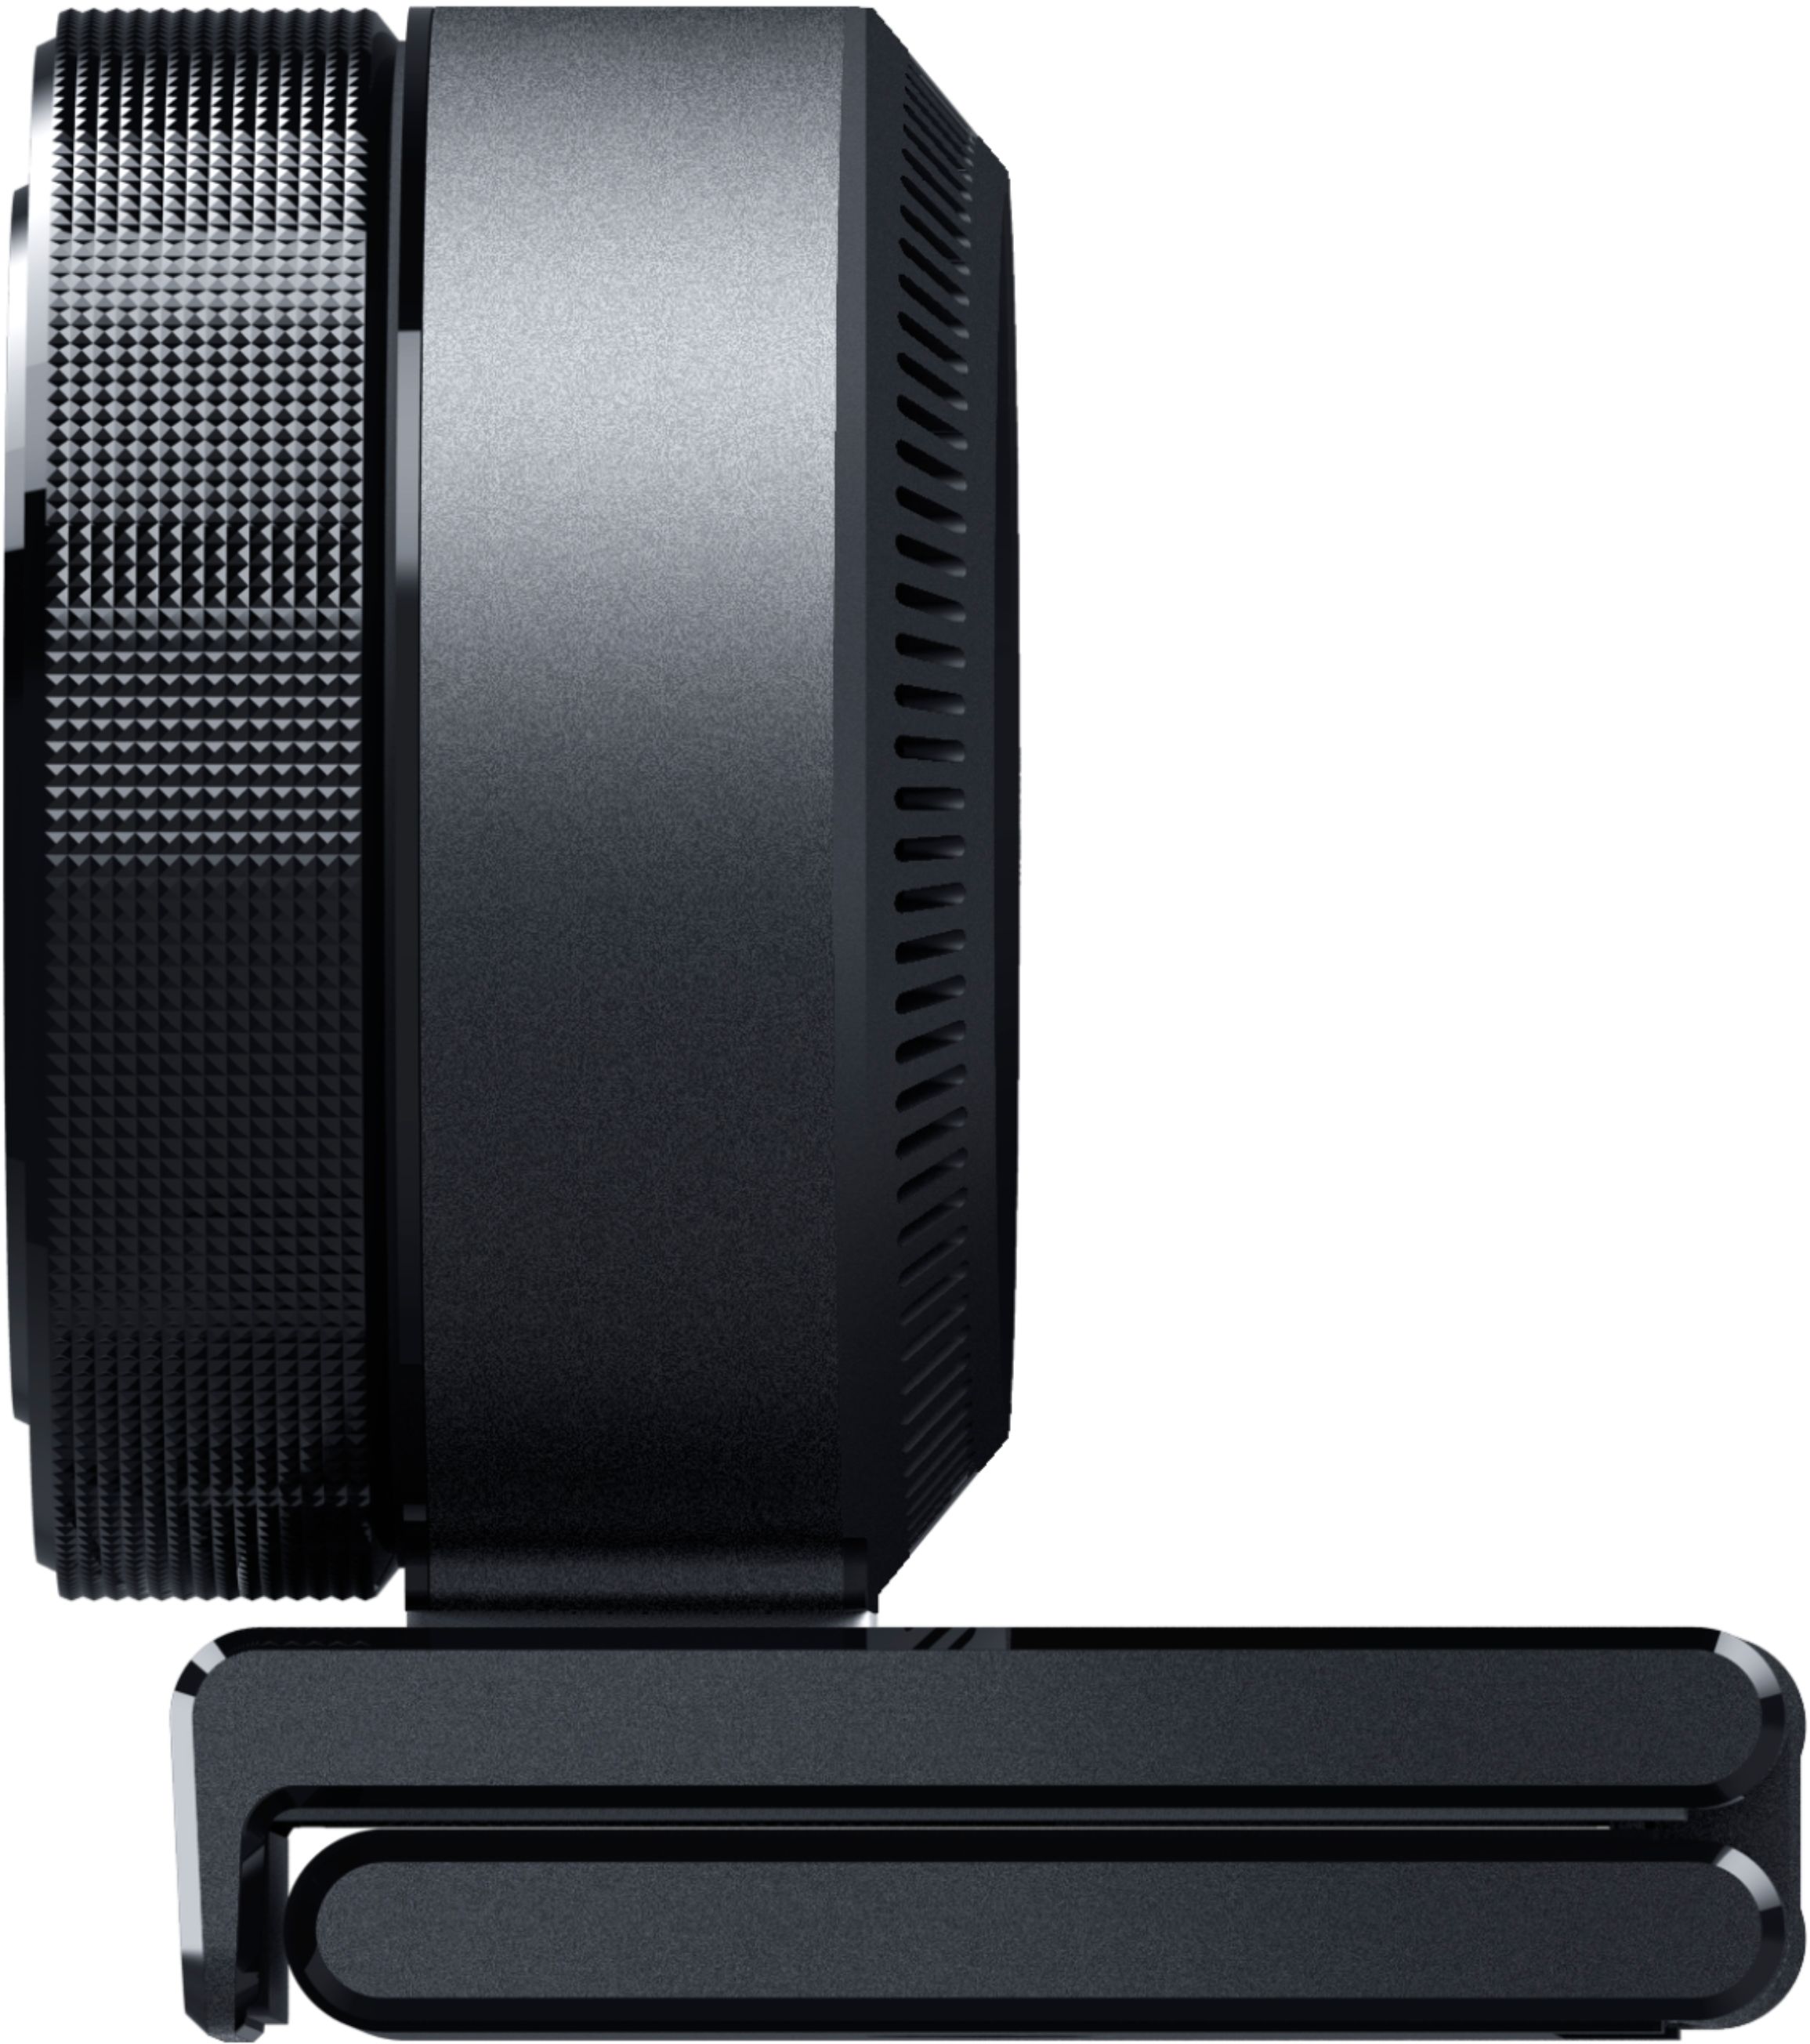 Razer Kiyo Pro USB Webcam High Performance Adaptive Light Sensor 86752297